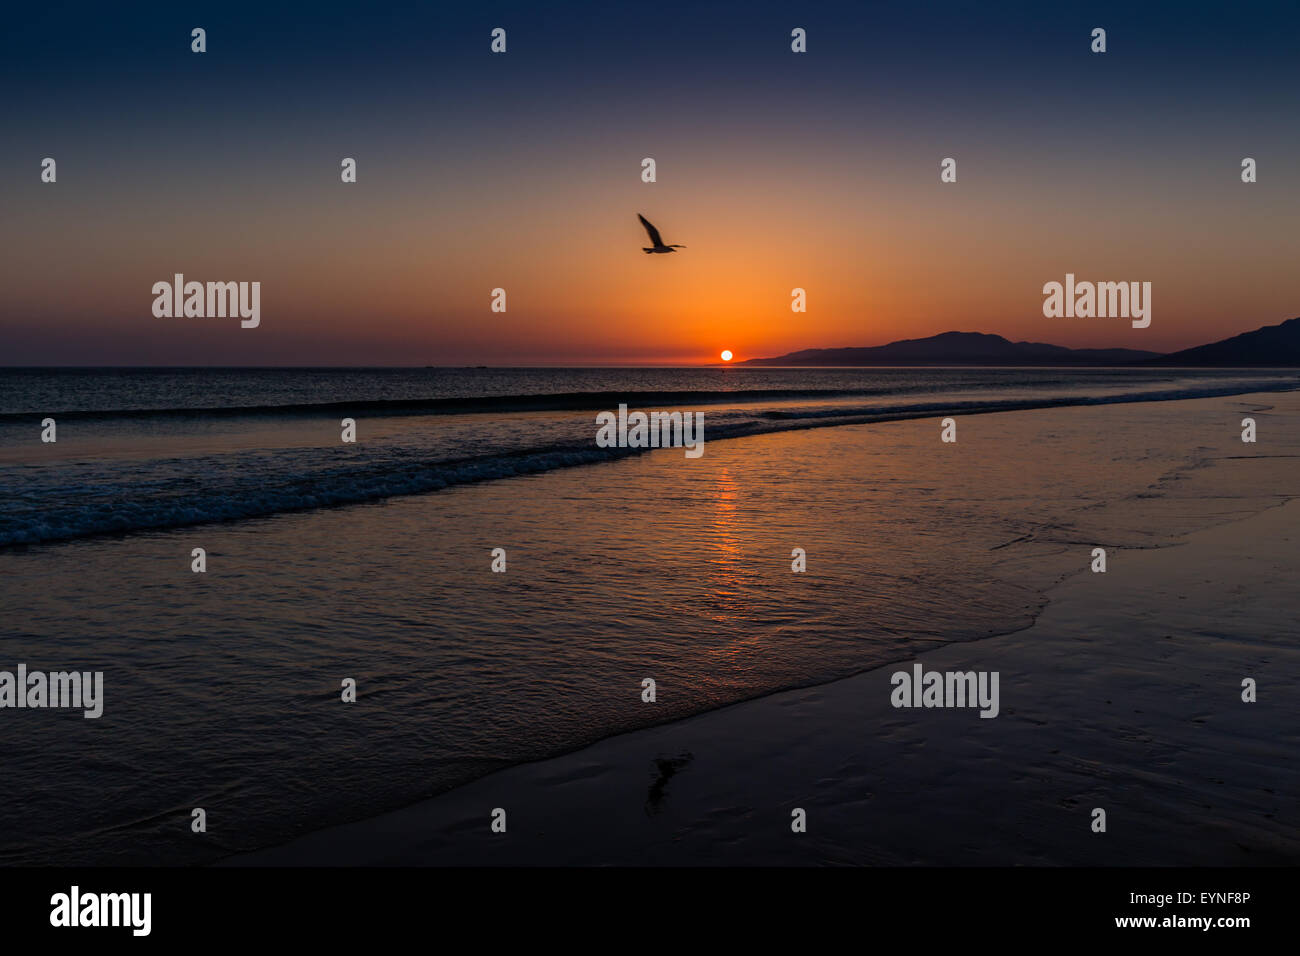 Sunset over the ocean with bird silhouette, Tarifa, Spain Stock Photo